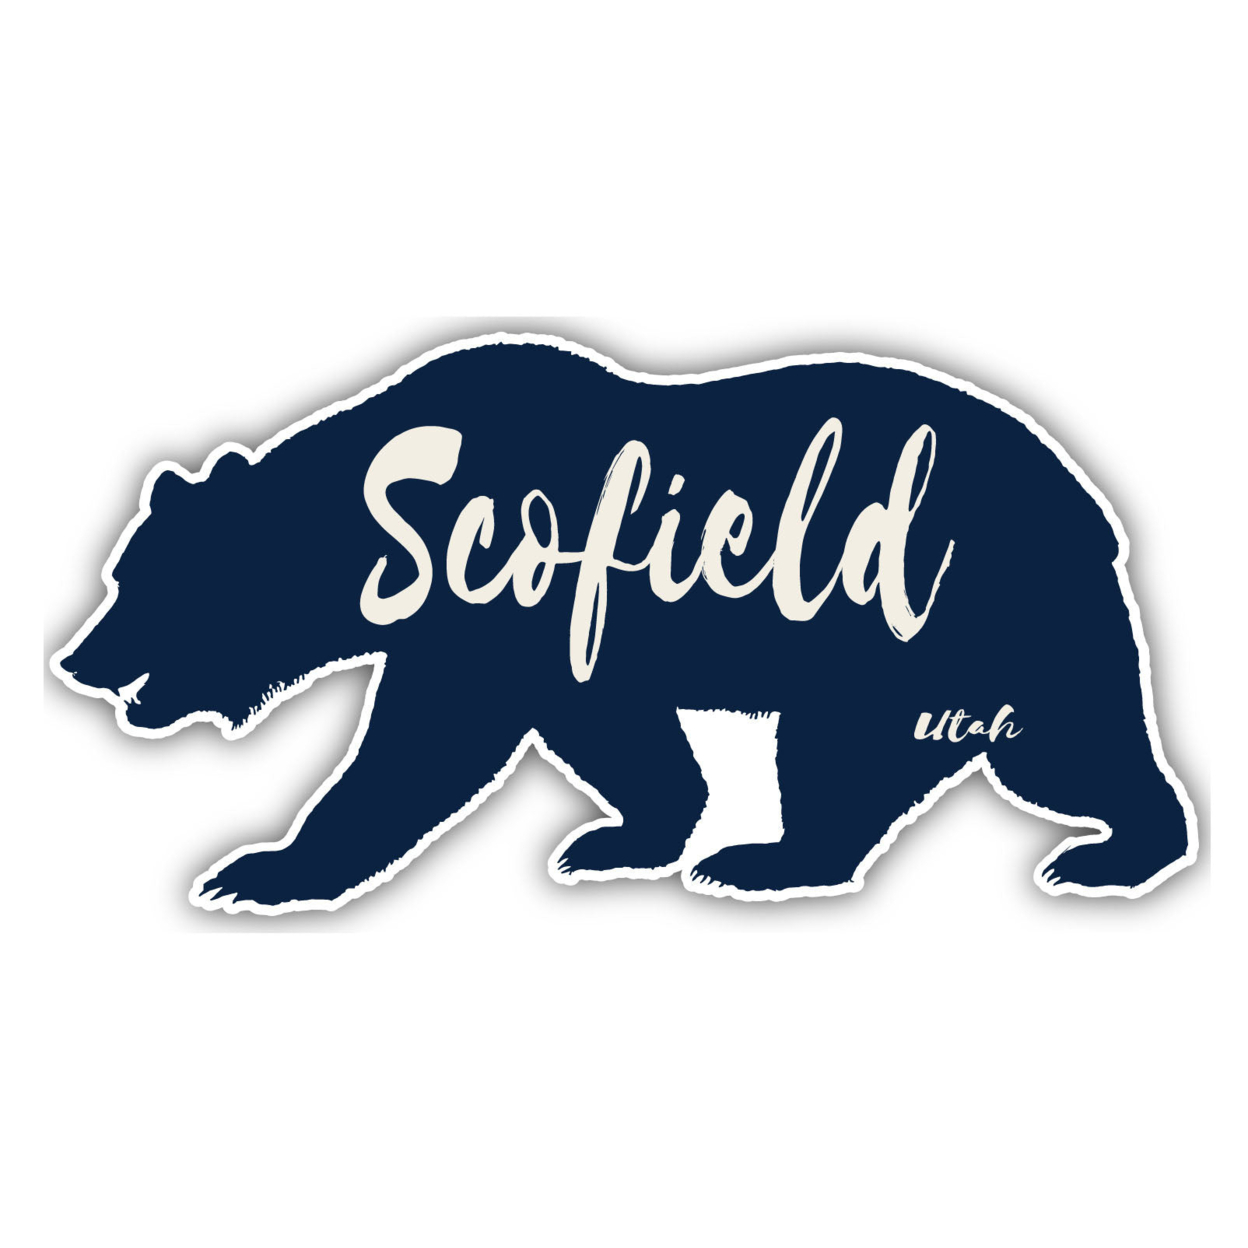 Scofield Utah Souvenir Decorative Stickers (Choose Theme And Size) - Single Unit, 2-Inch, Tent